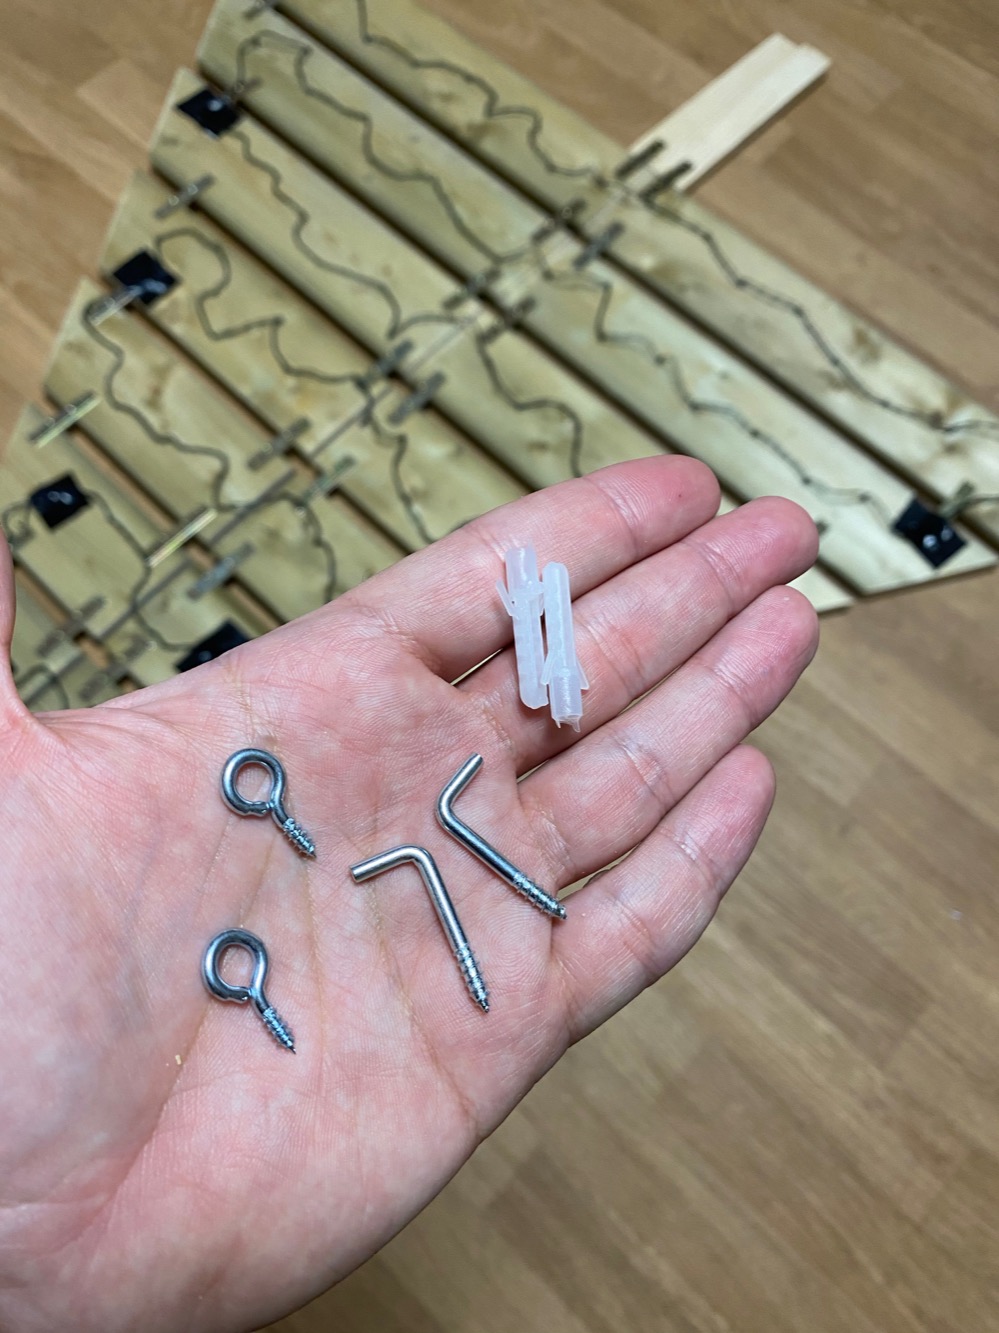 Adding some hangers